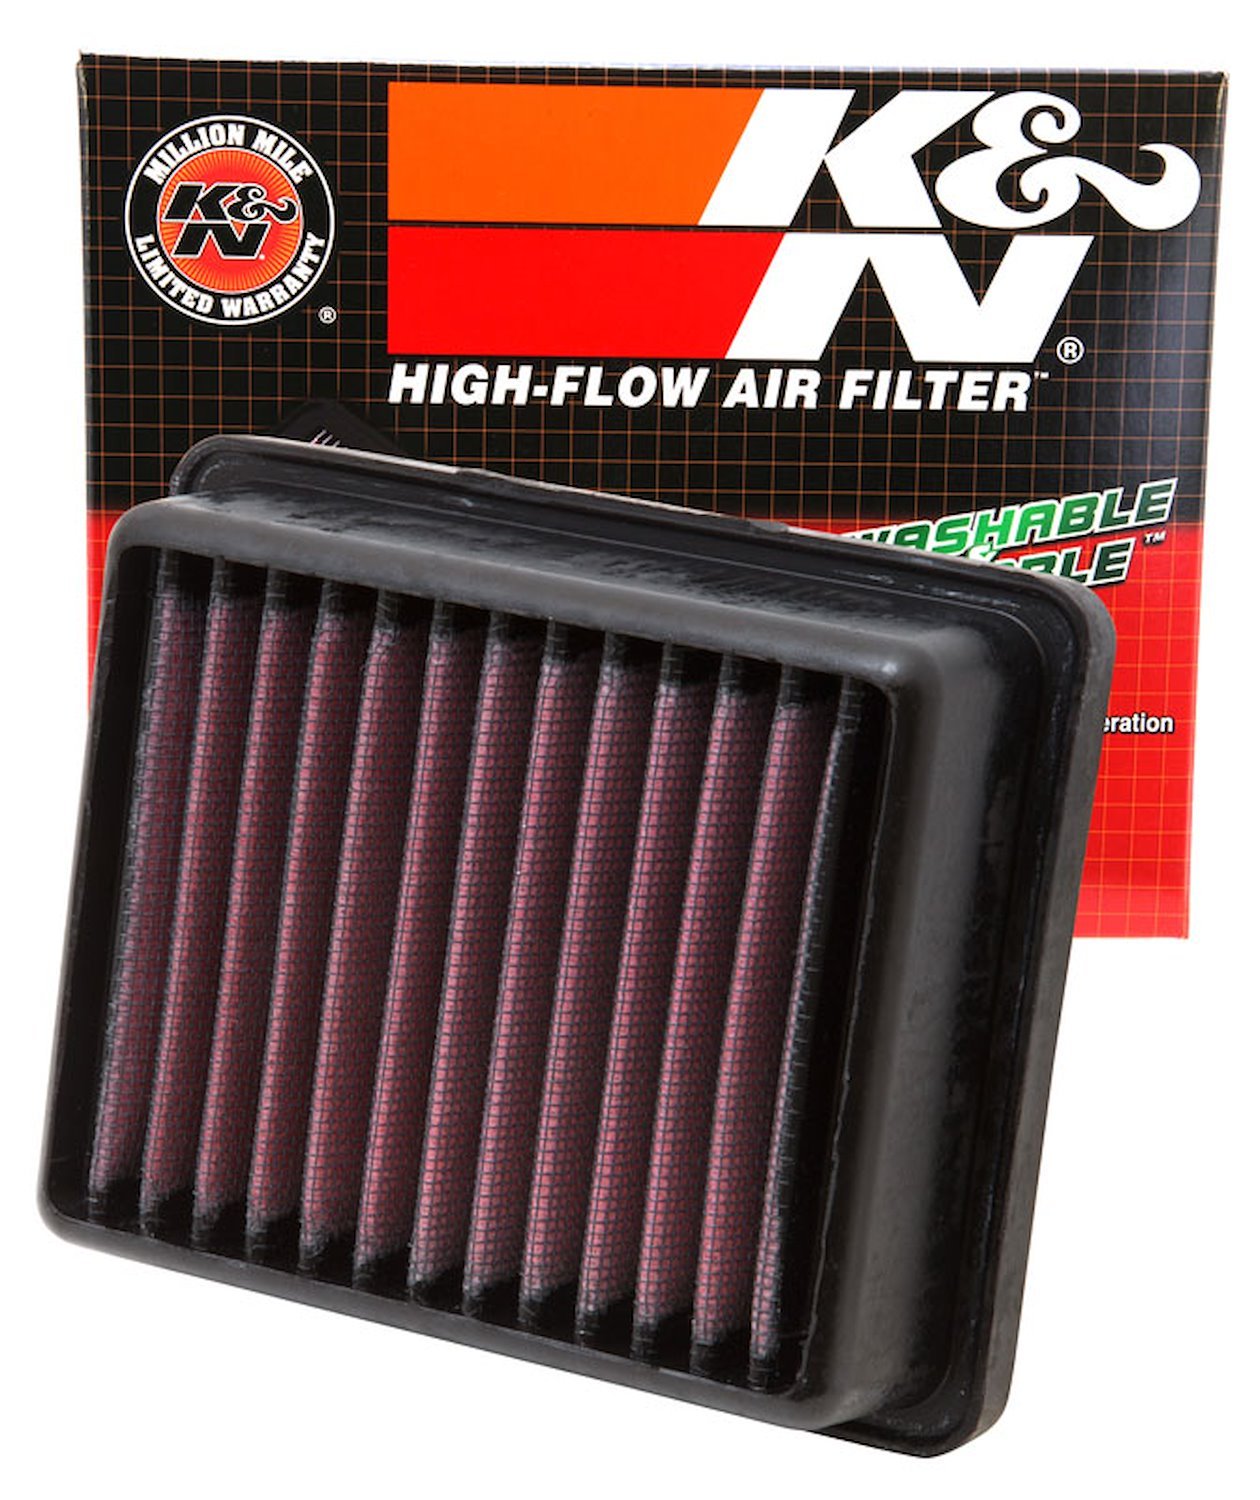 High-Performance Replacement Air Filter 2011-2013 KTM 125 Duke